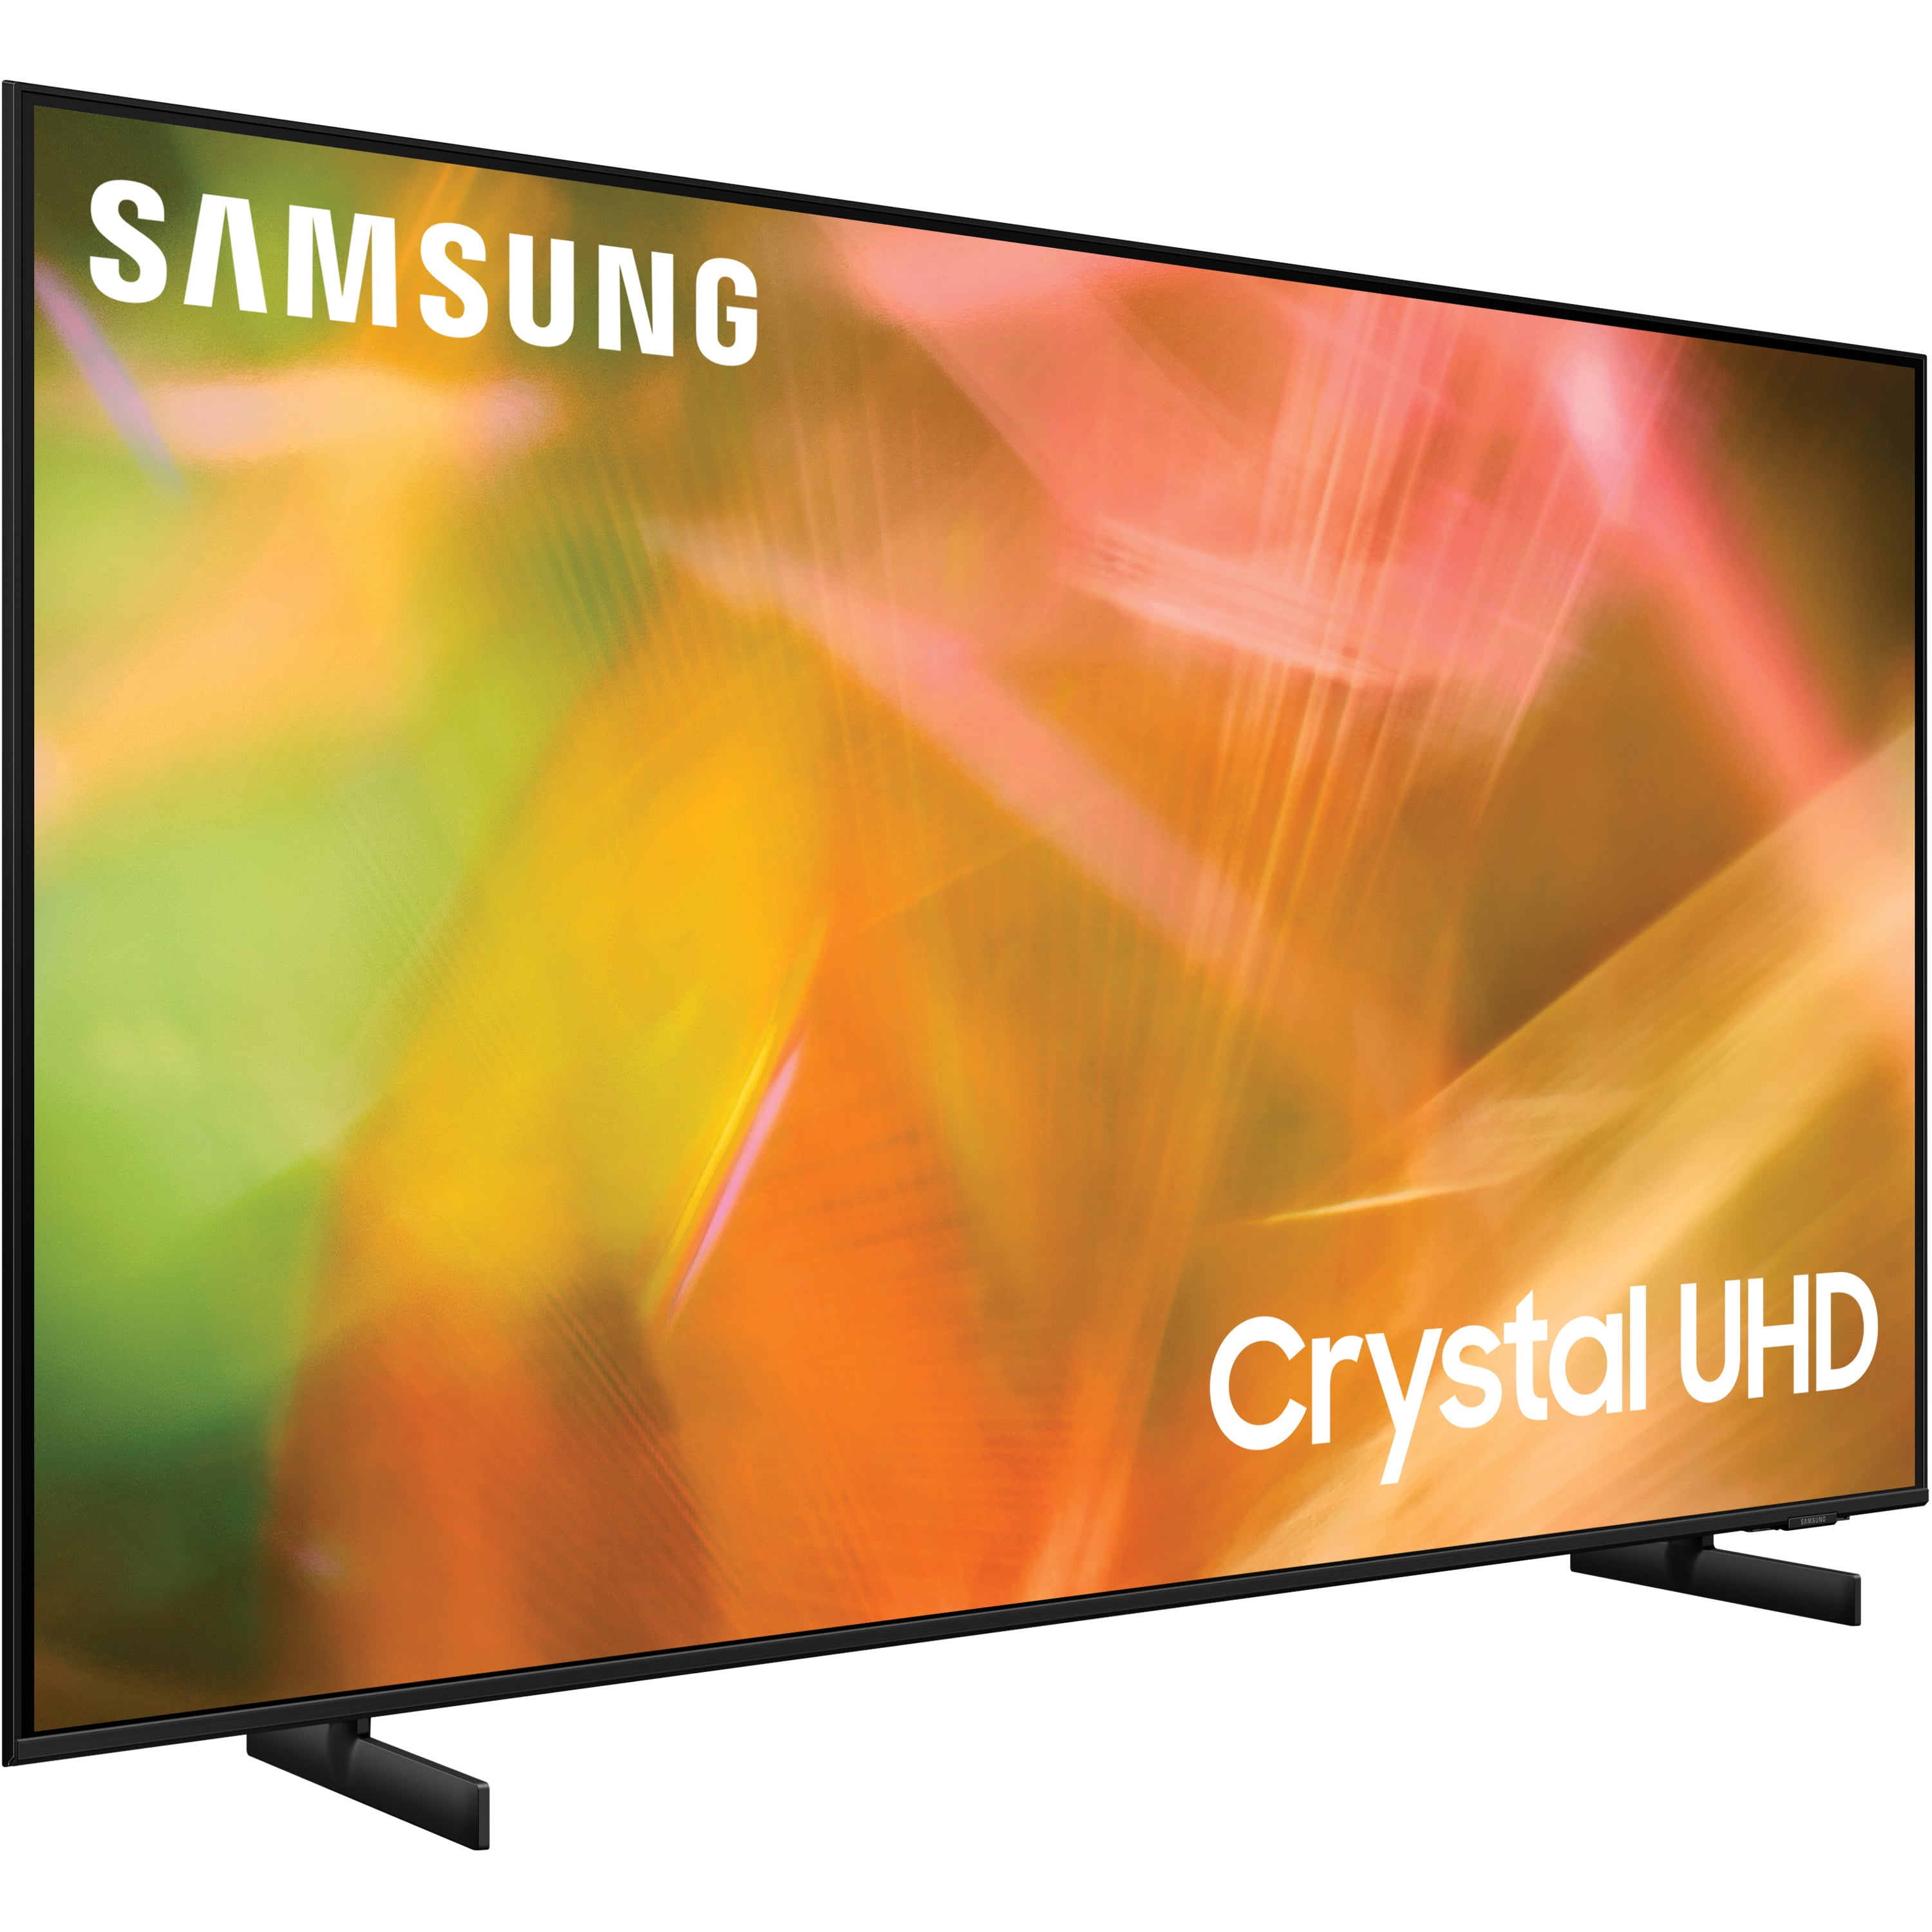 Samsung Class Crystal UHD (2160p) LED Smart TV with HDR UN43AU8000 2021 - Walmart.com